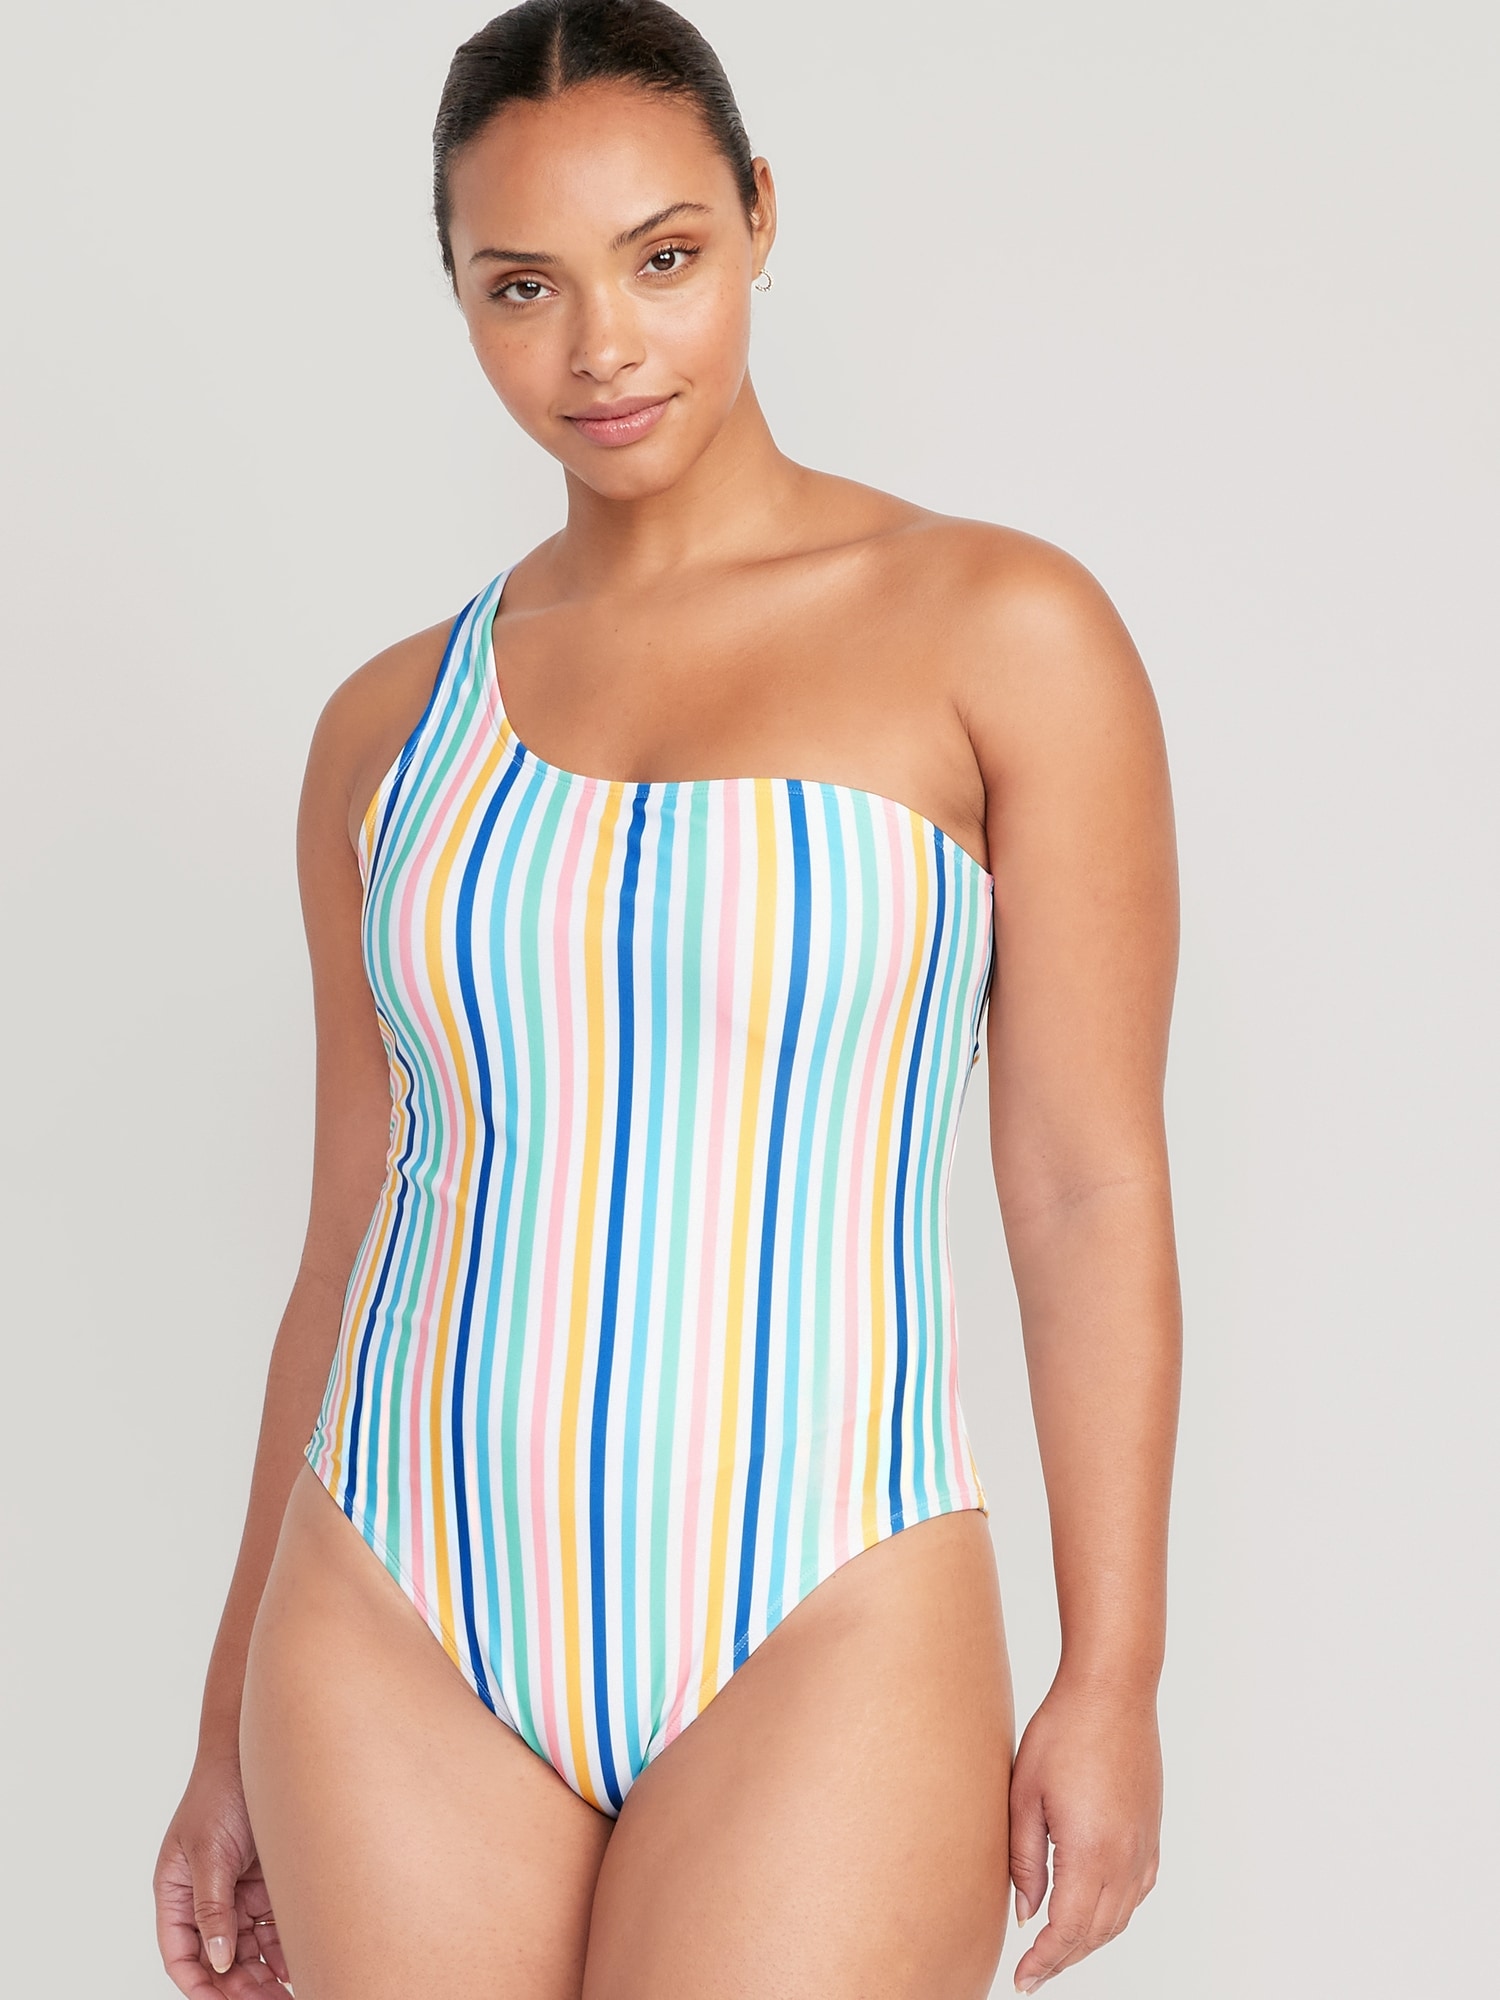 High Leg One-shoulder Swimsuit - Bright blue/striped - Ladies